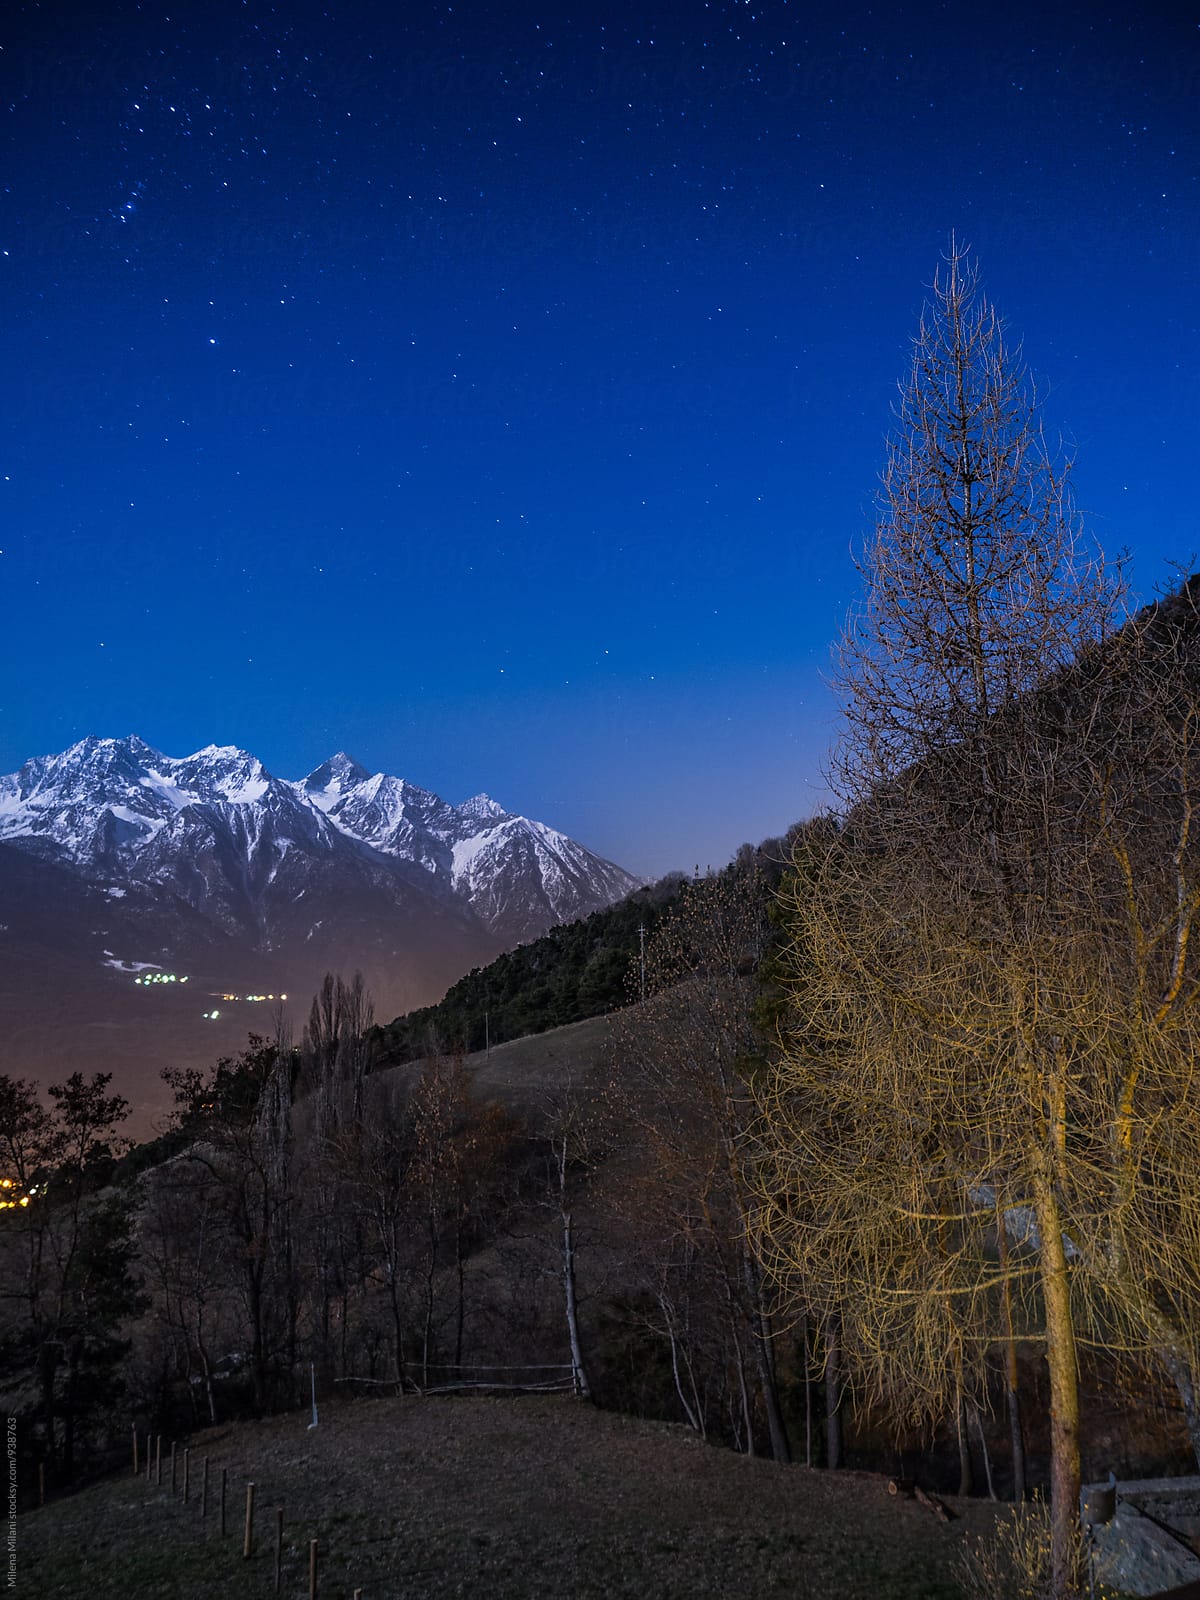 Night sky in the Alps